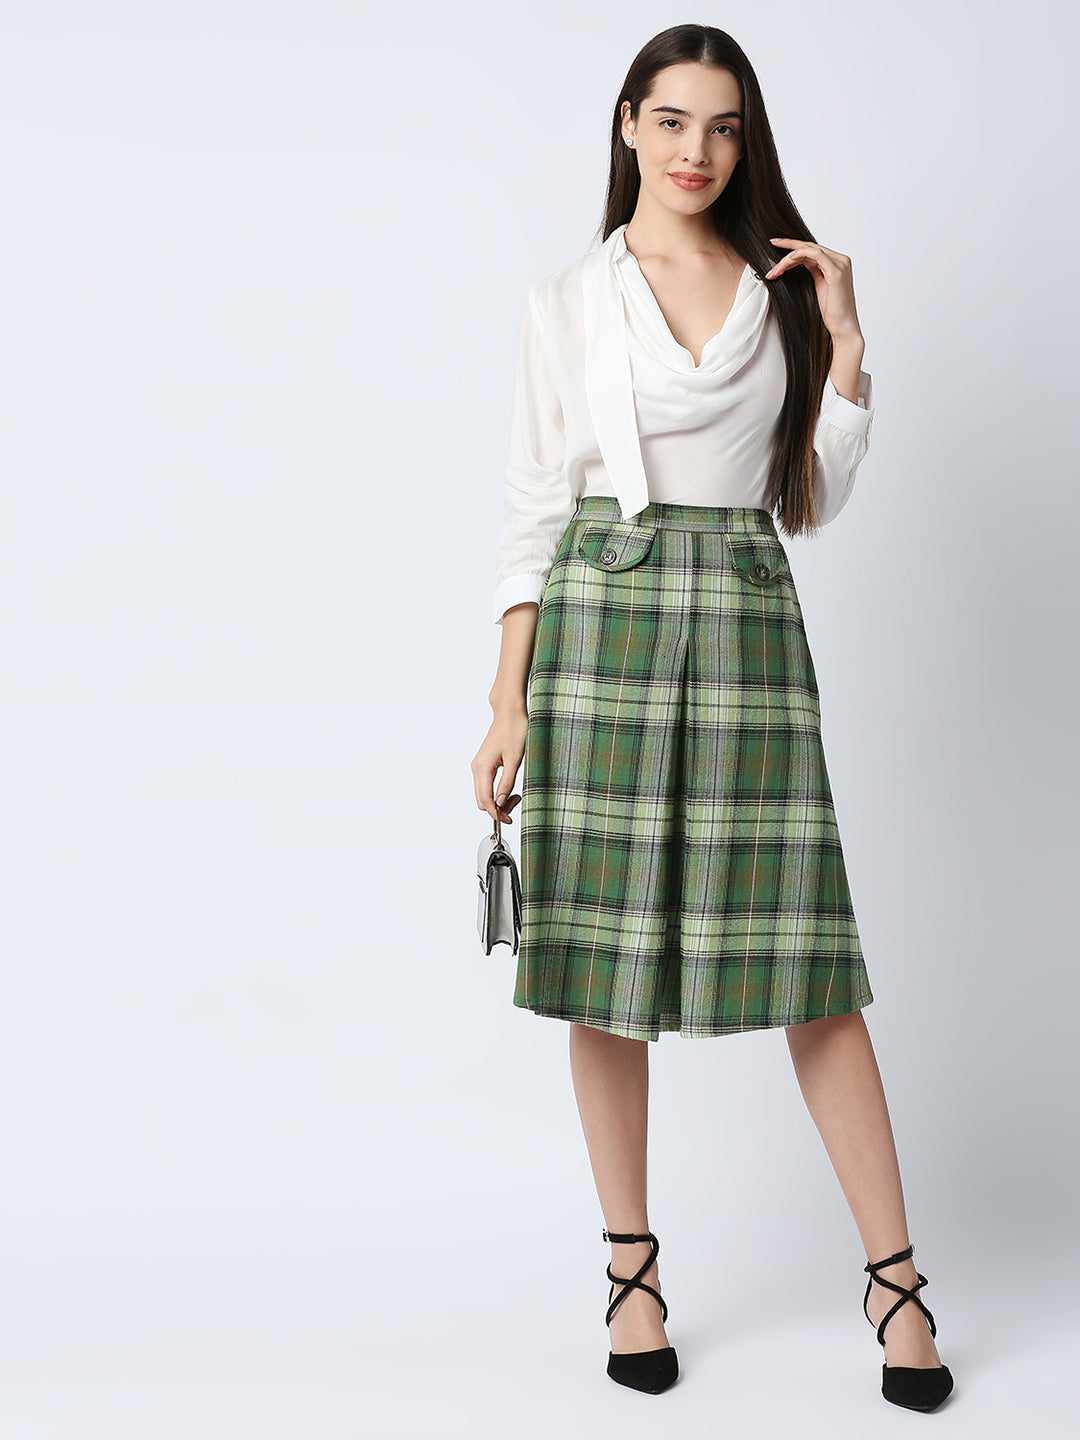 Mantra checkered  A-line skirt